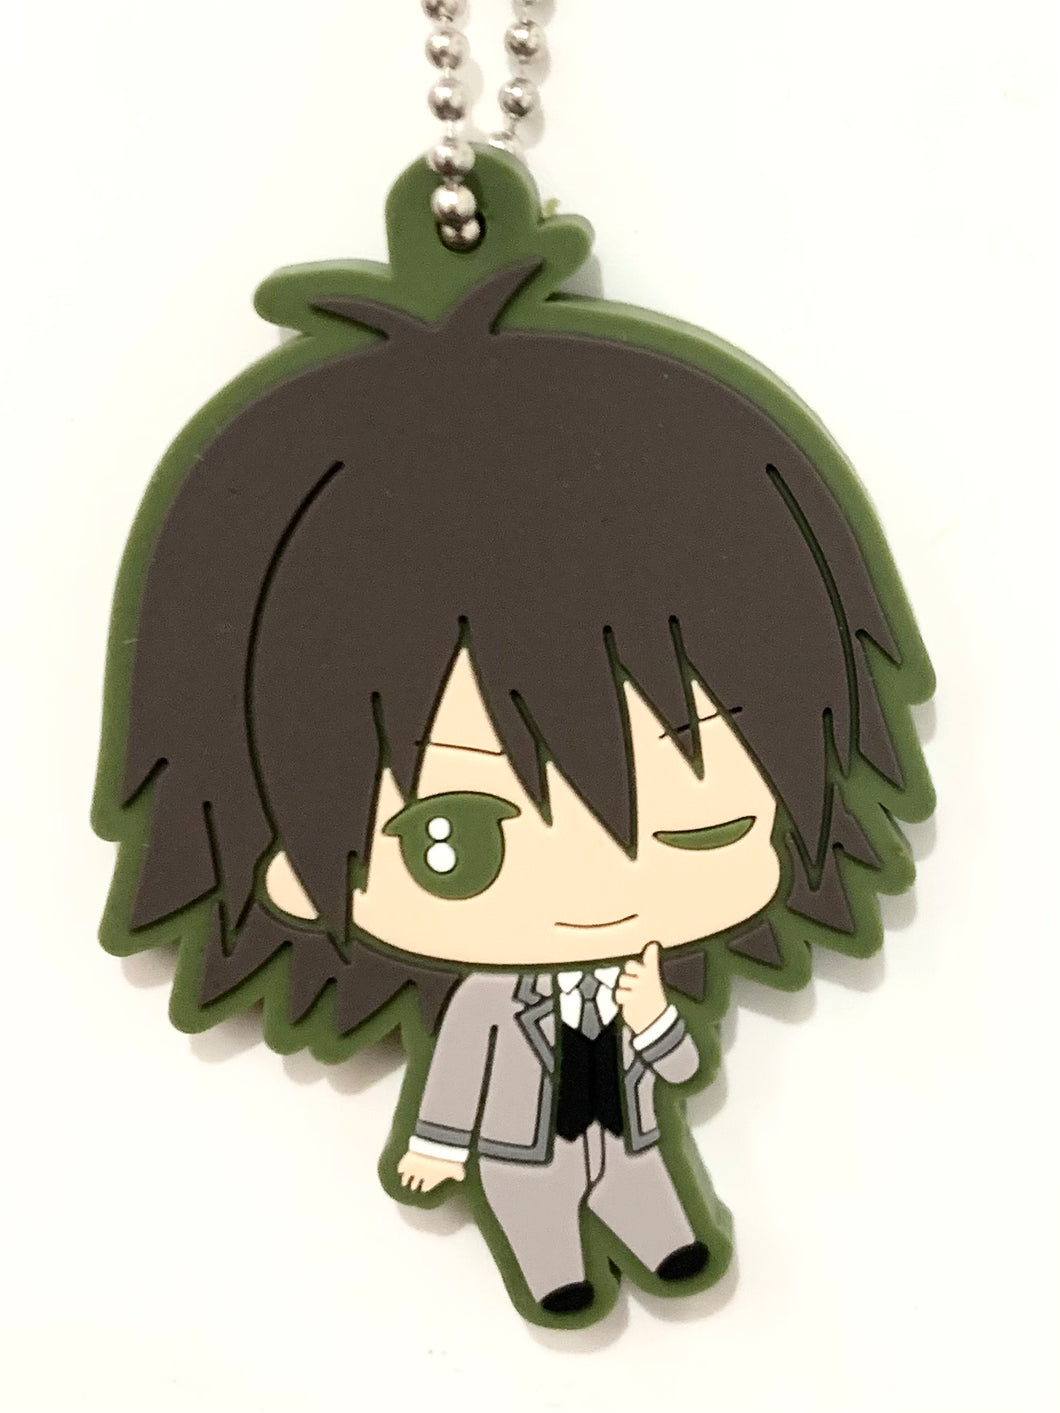 Assassination Classroom - Isogai Yuuma - Capsule Rubber Strap Mascot